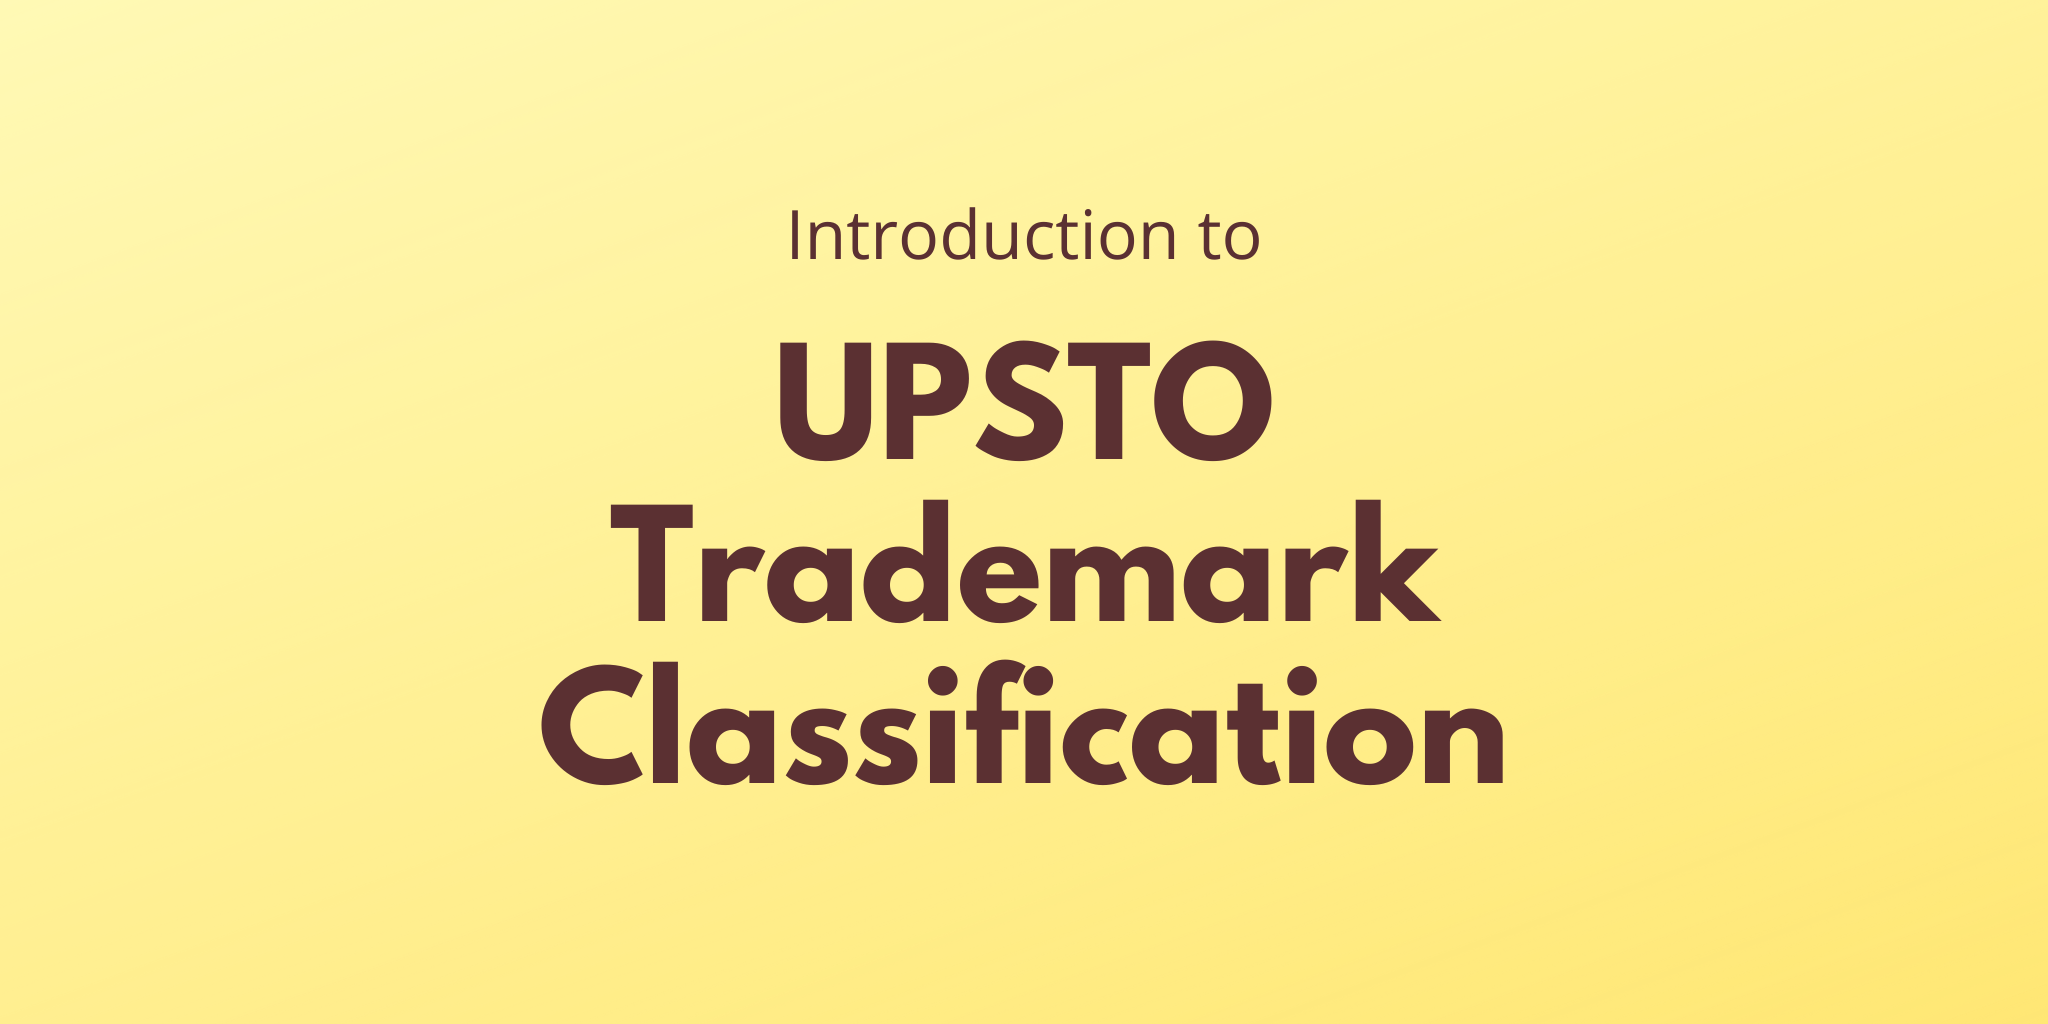 USPTO Trademark classifications